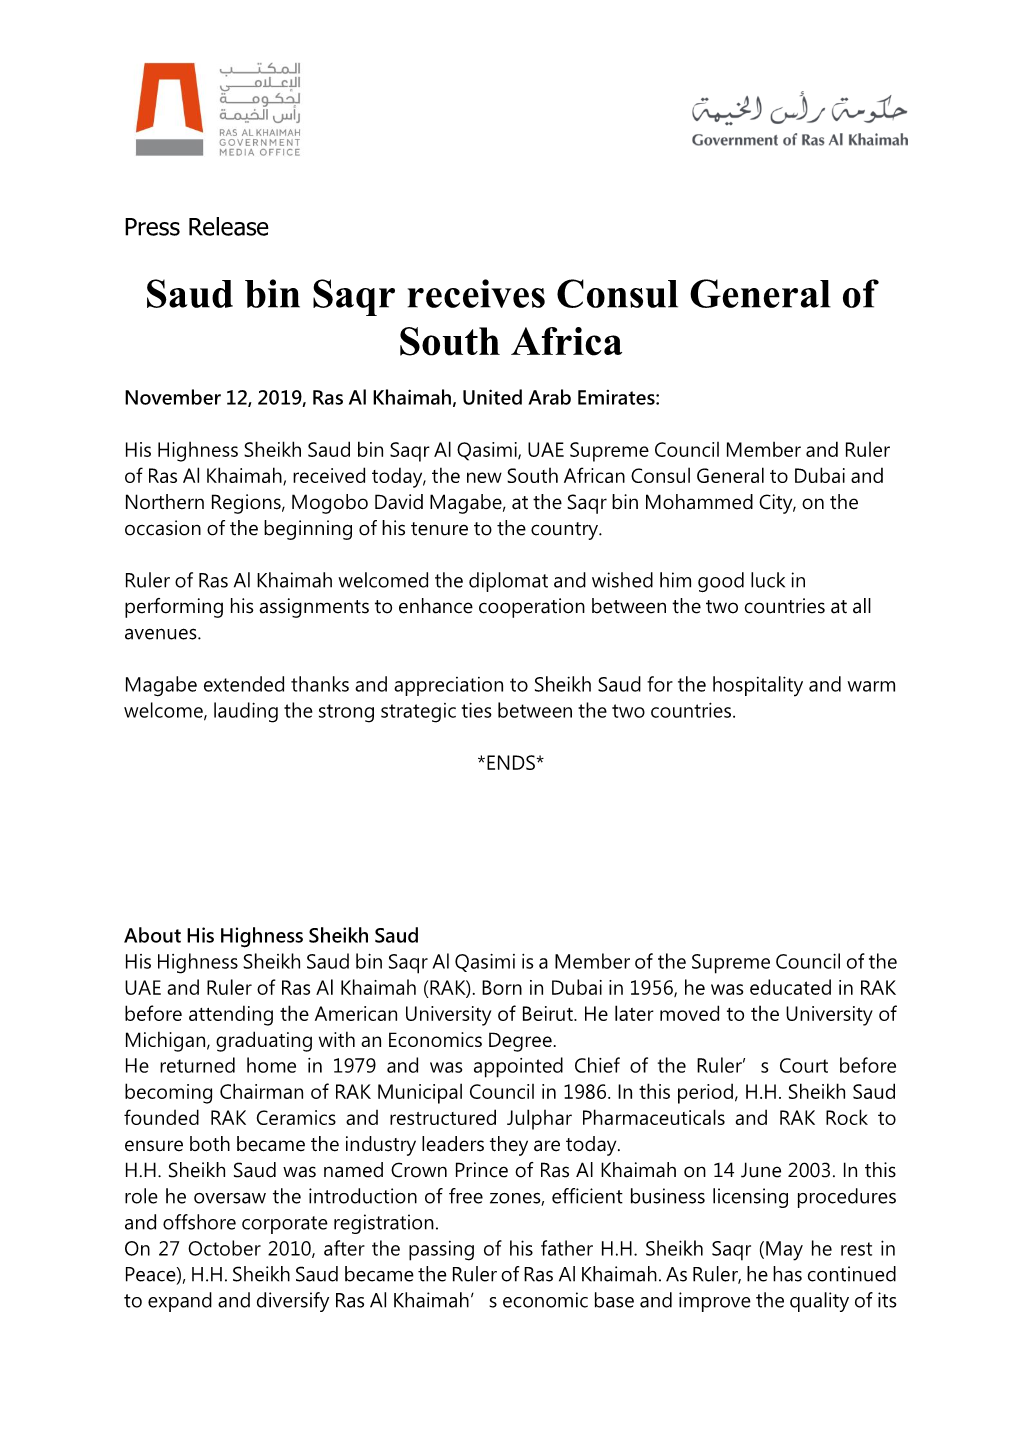 Saud Bin Saqr Receives Consul General of South Africa